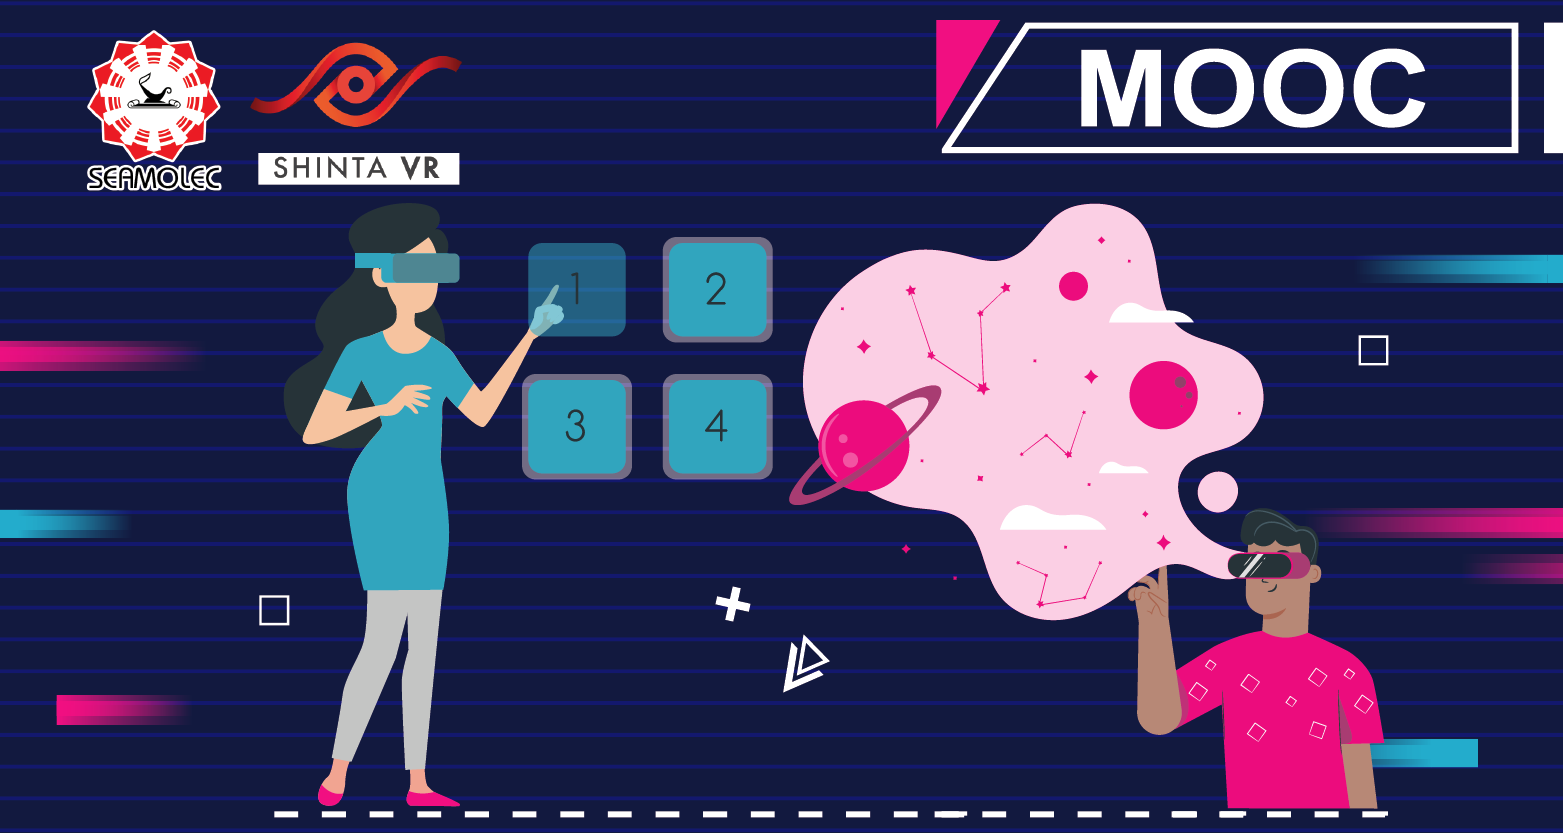 Virtual Reality based Learning Material Development for Beginners SVR-01